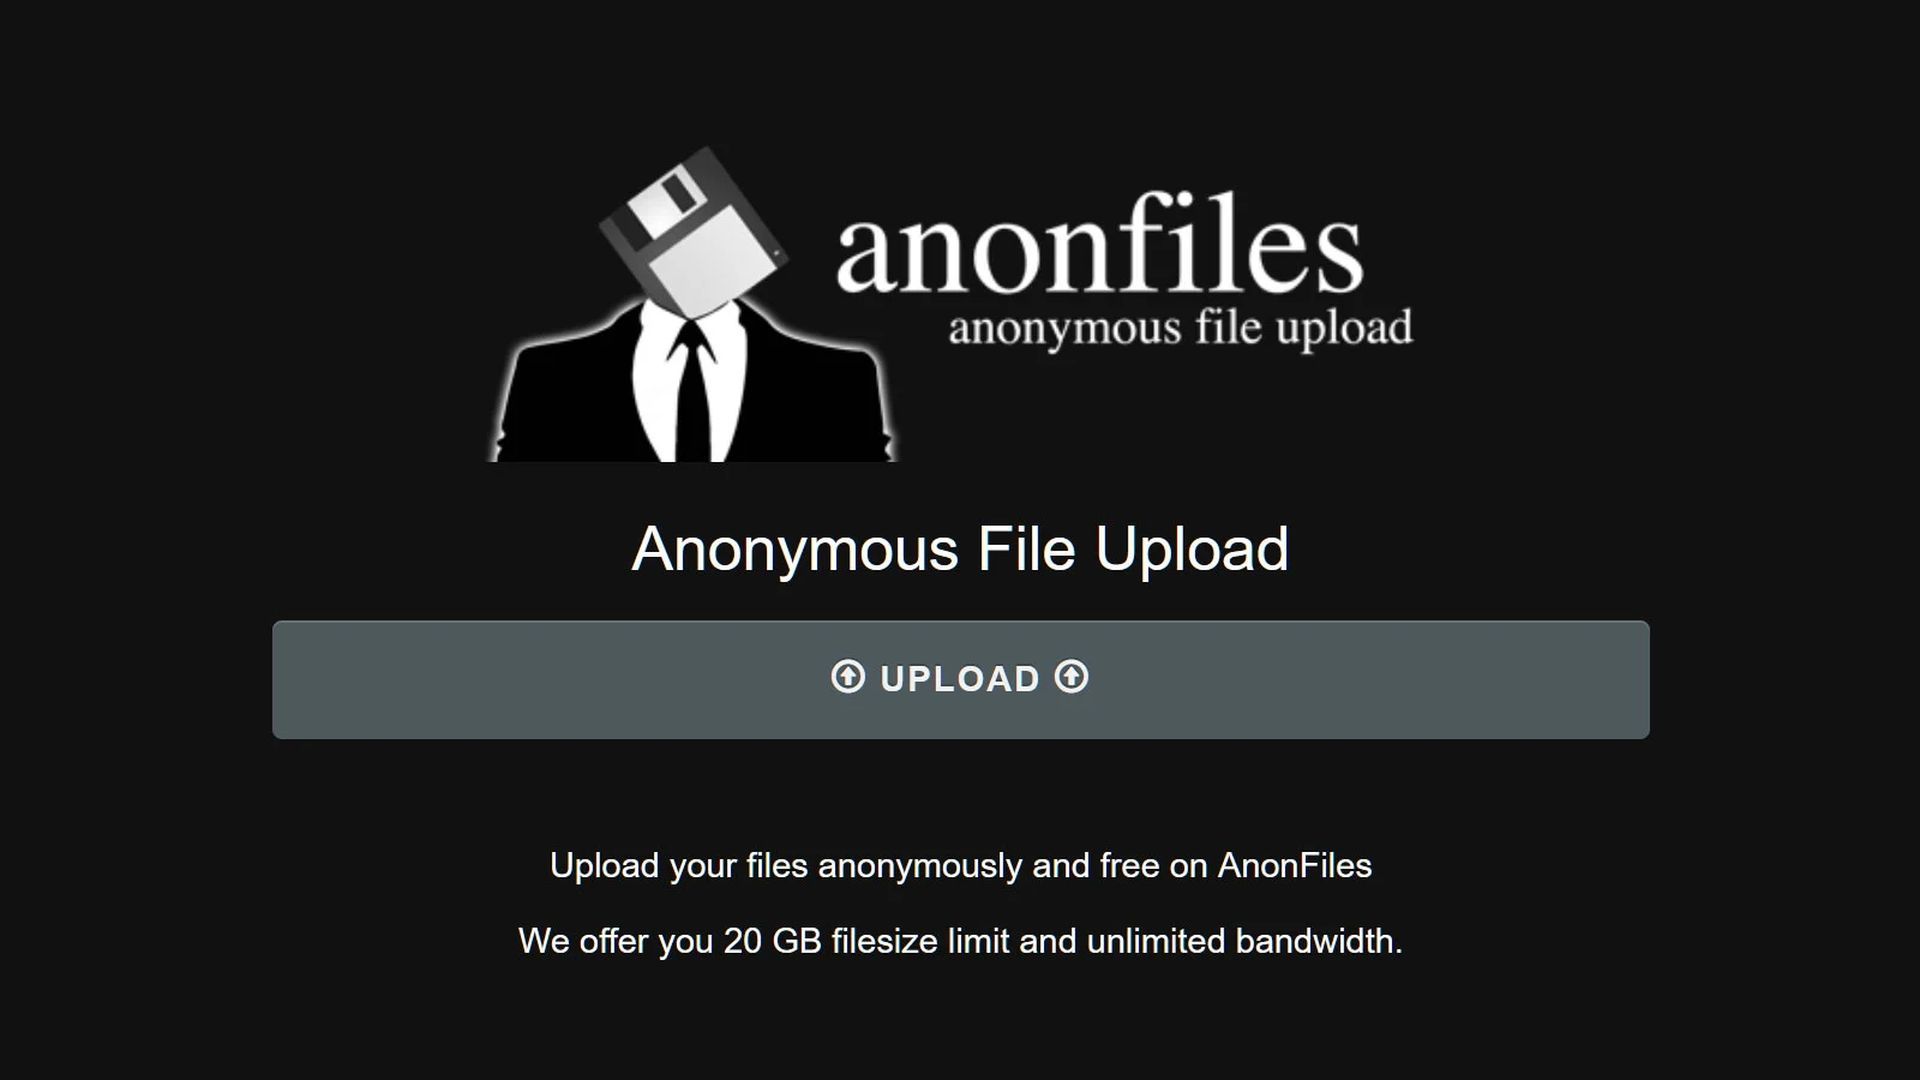 Anonfiles shut down